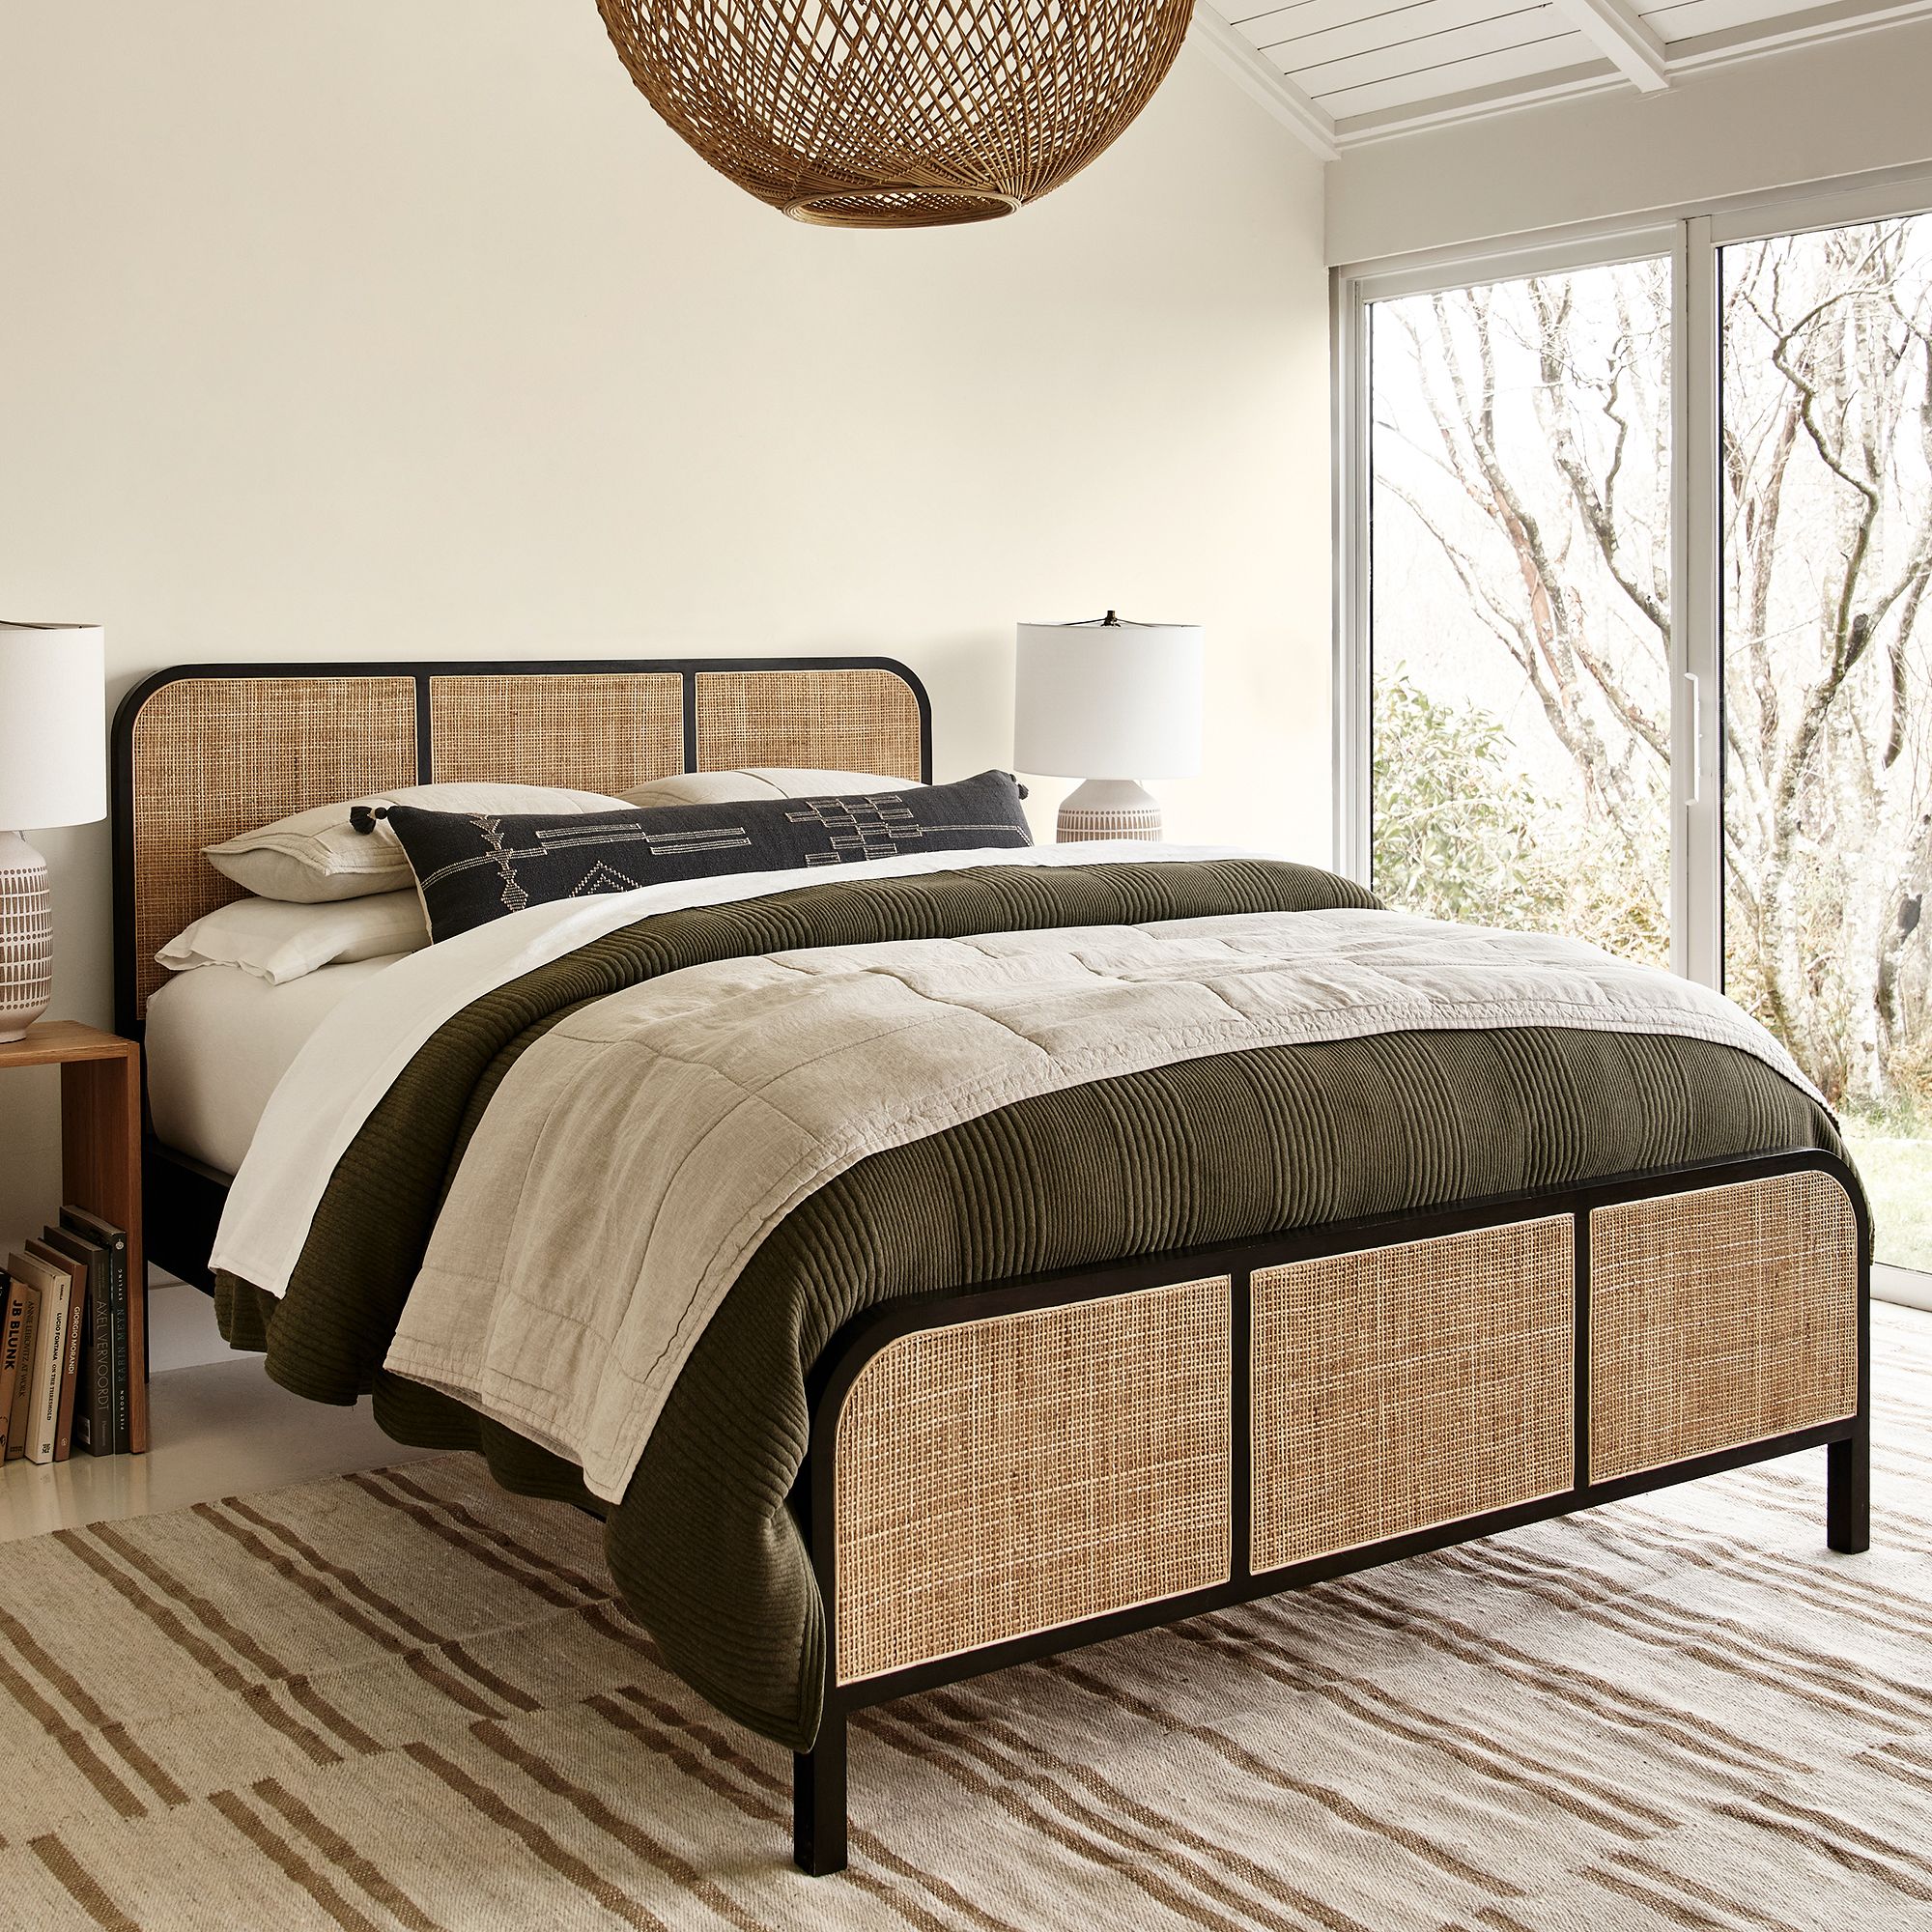 Buzzard Cane & Wood Bed